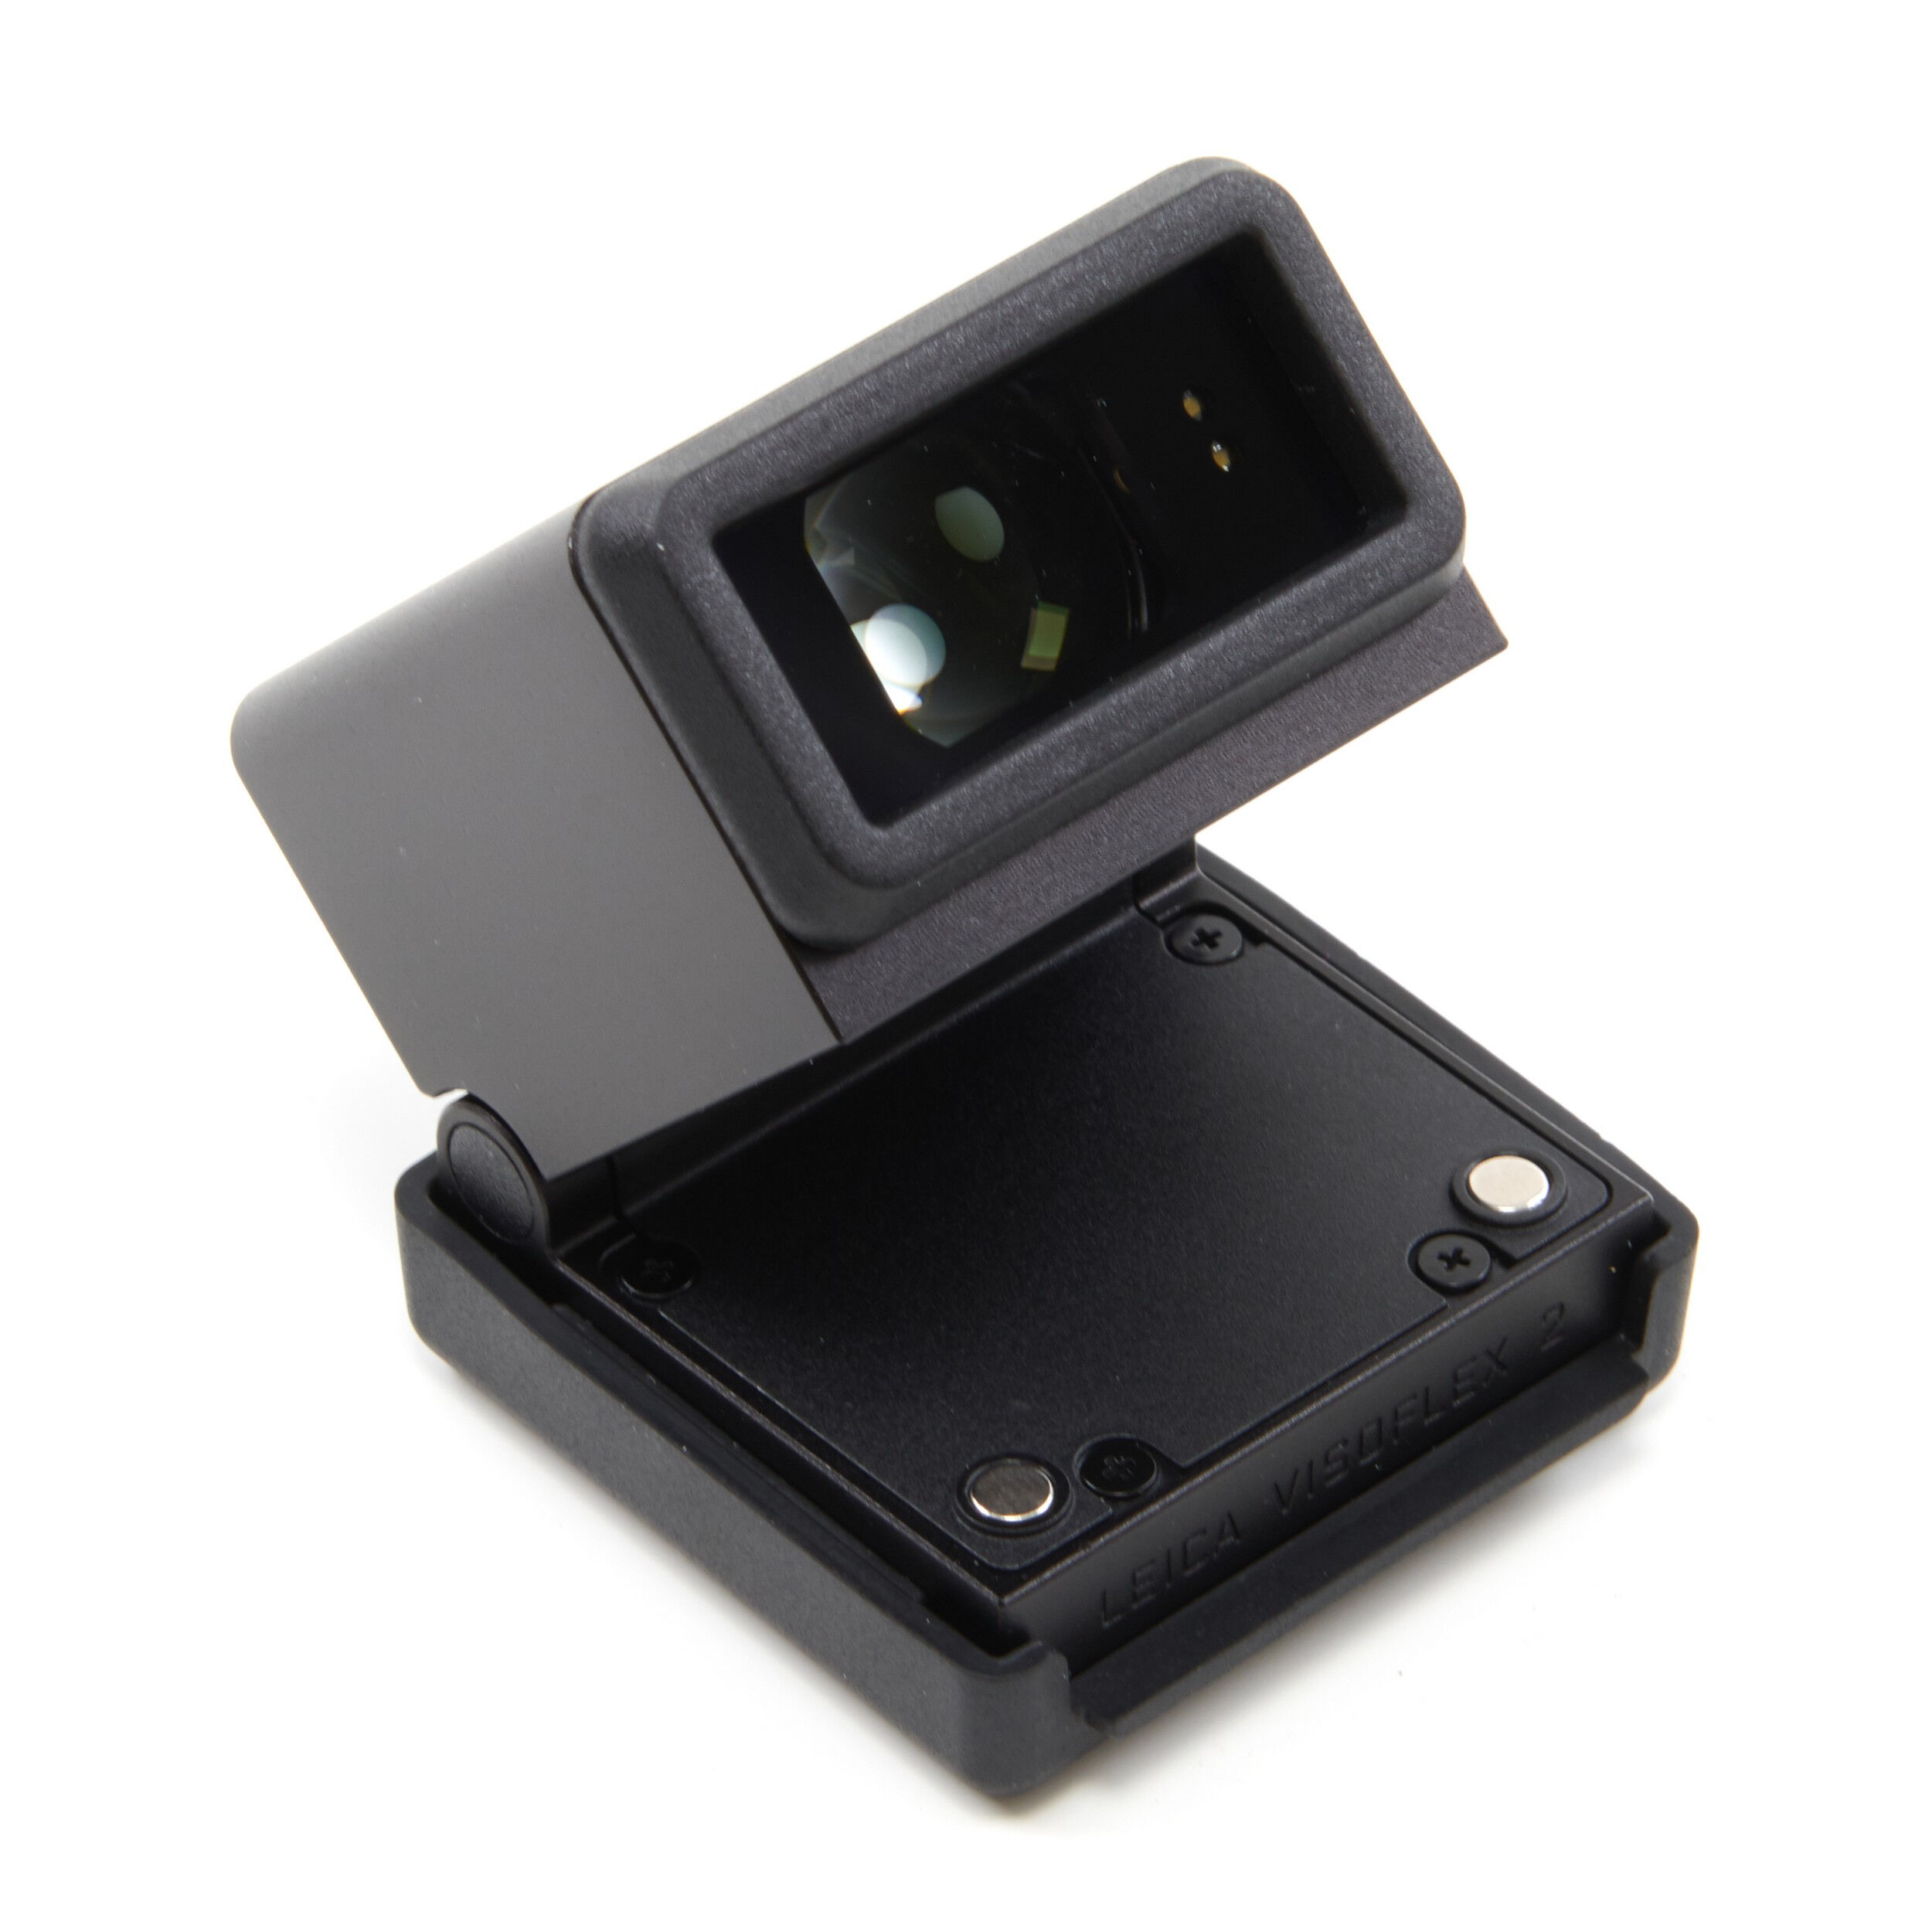 LEICA VISOFLEX 2 ELECTRONIC VIEWFINDER FOR LEICA M10 / M11 + BOX 24028 #4530